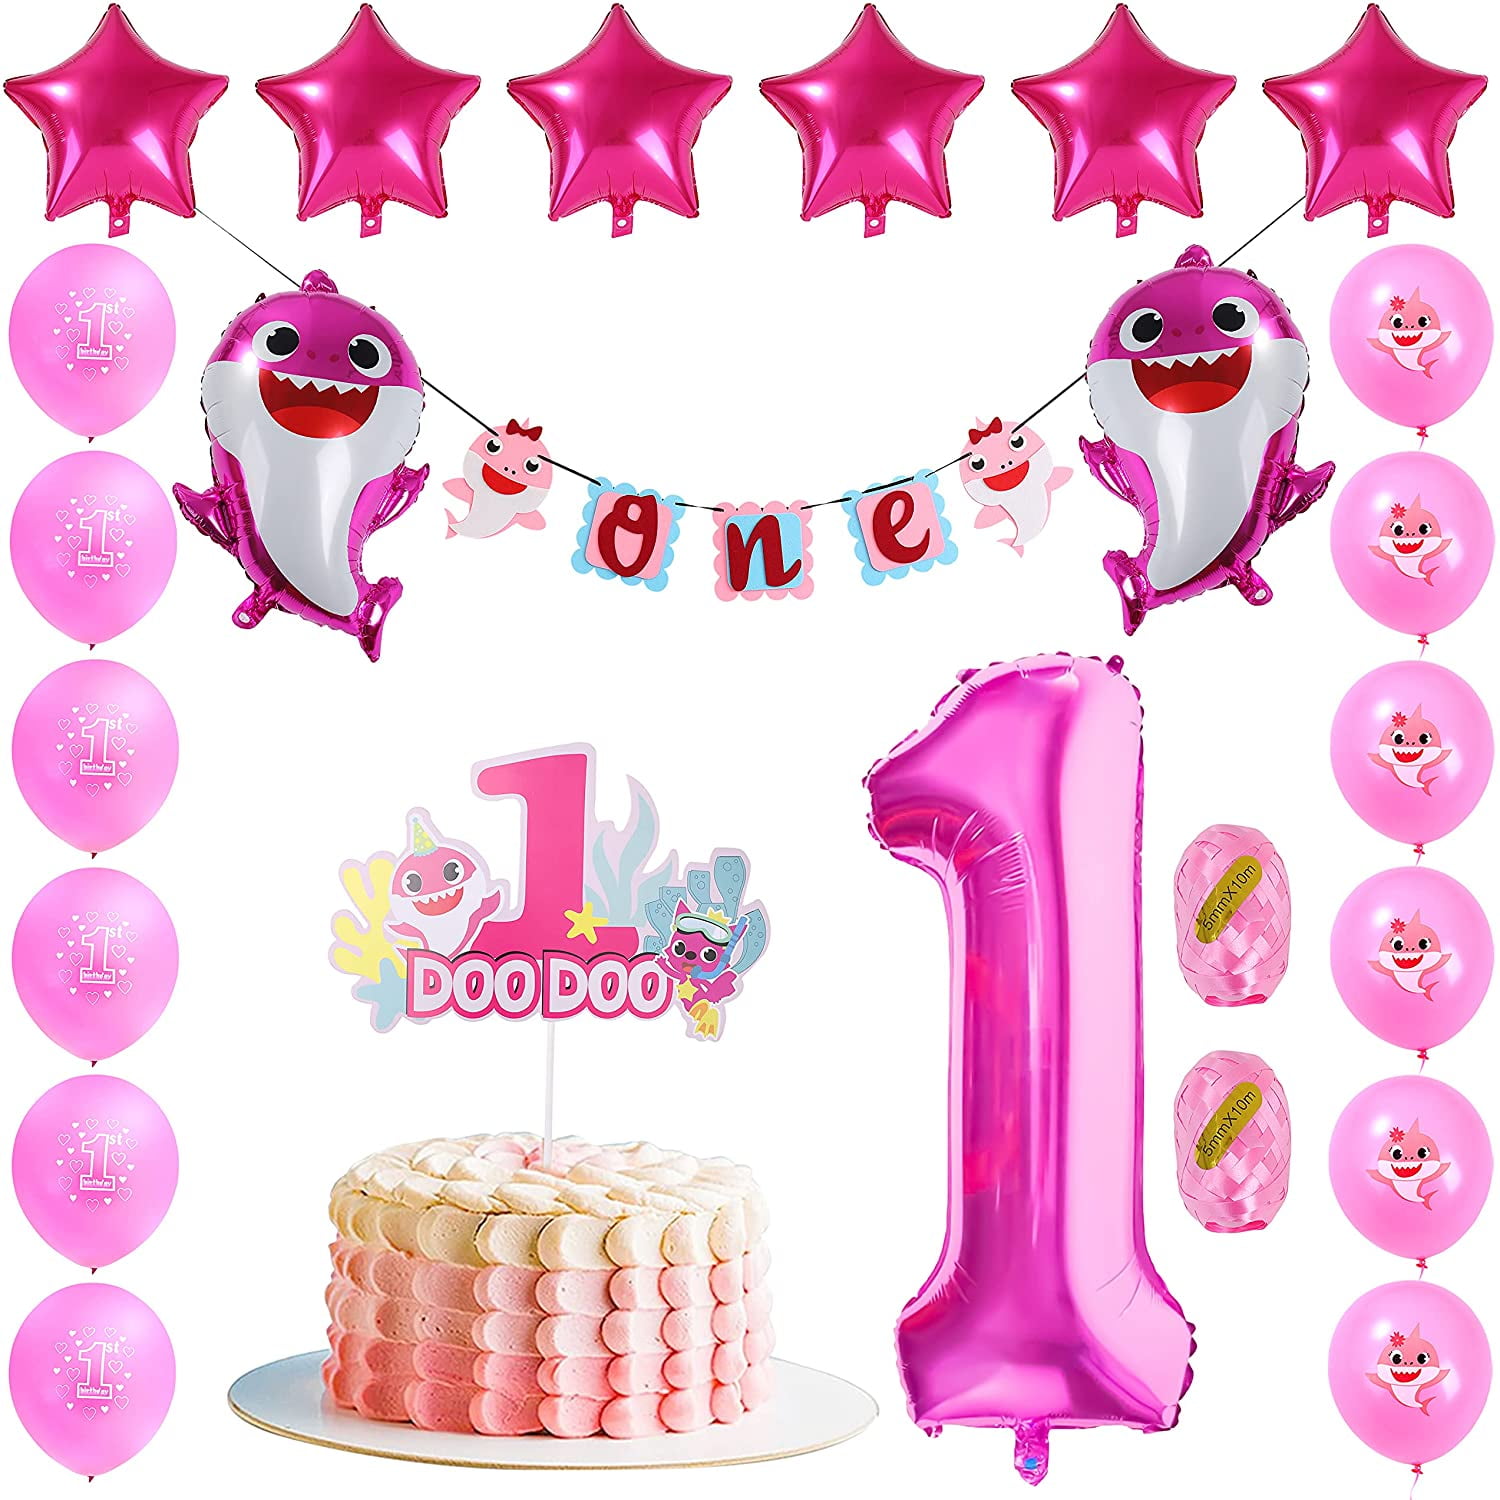 PINK BABY SHARK  DooDooDoo Happy Birthday Party CAKE TOPPER DECORATION 1pc